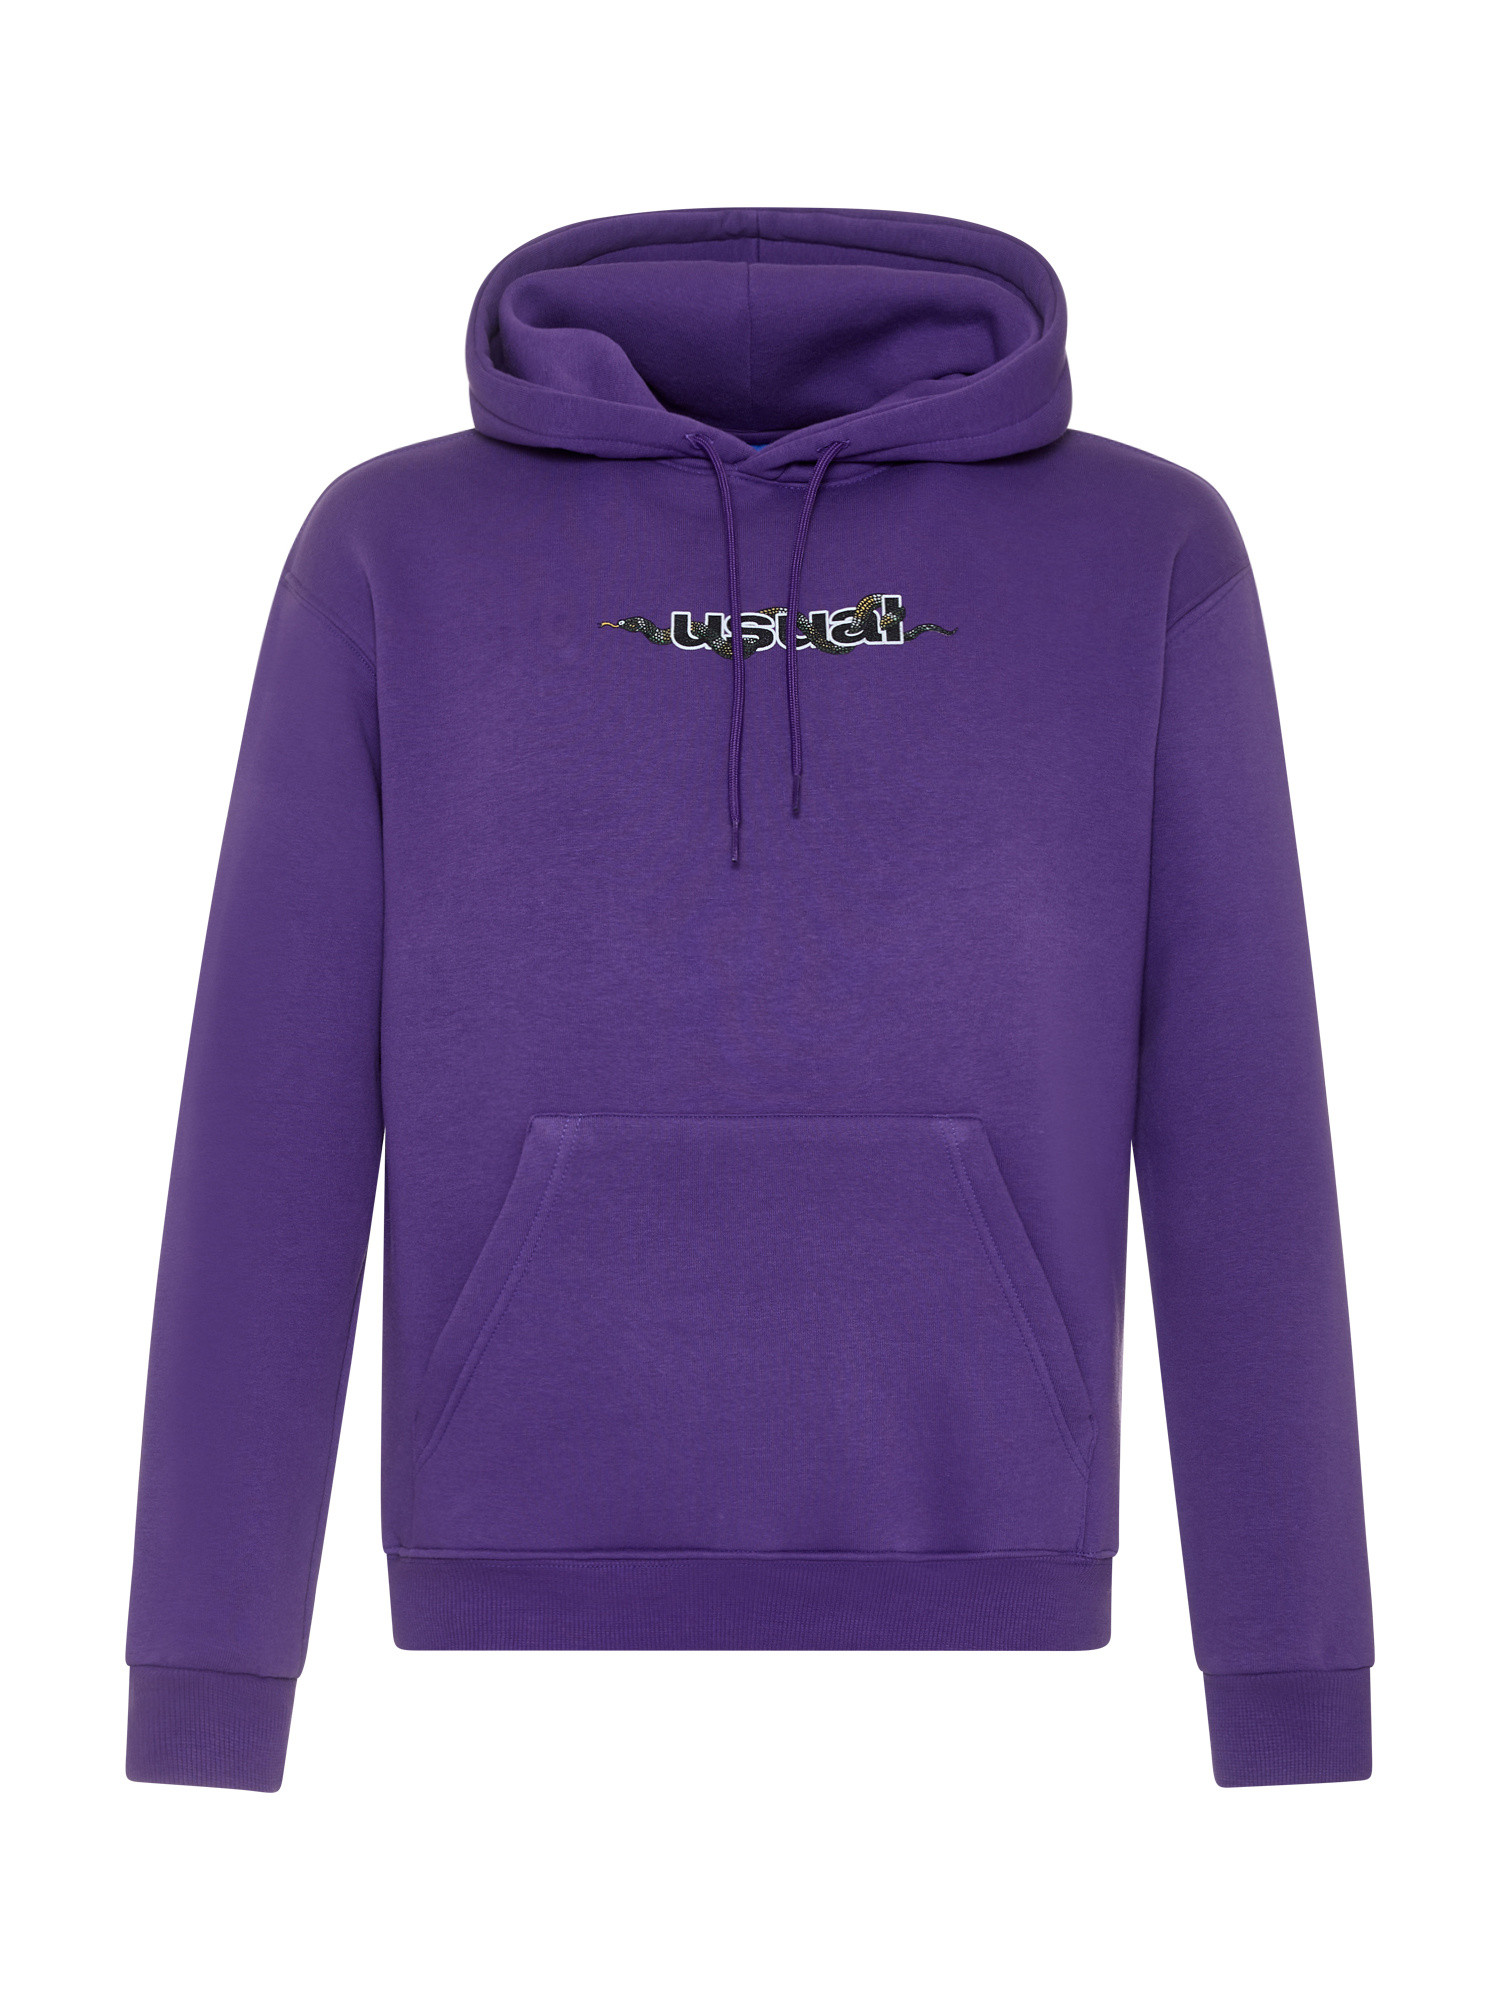 Usual - Poison Hooded Sweatshirt, Purple, large image number 0